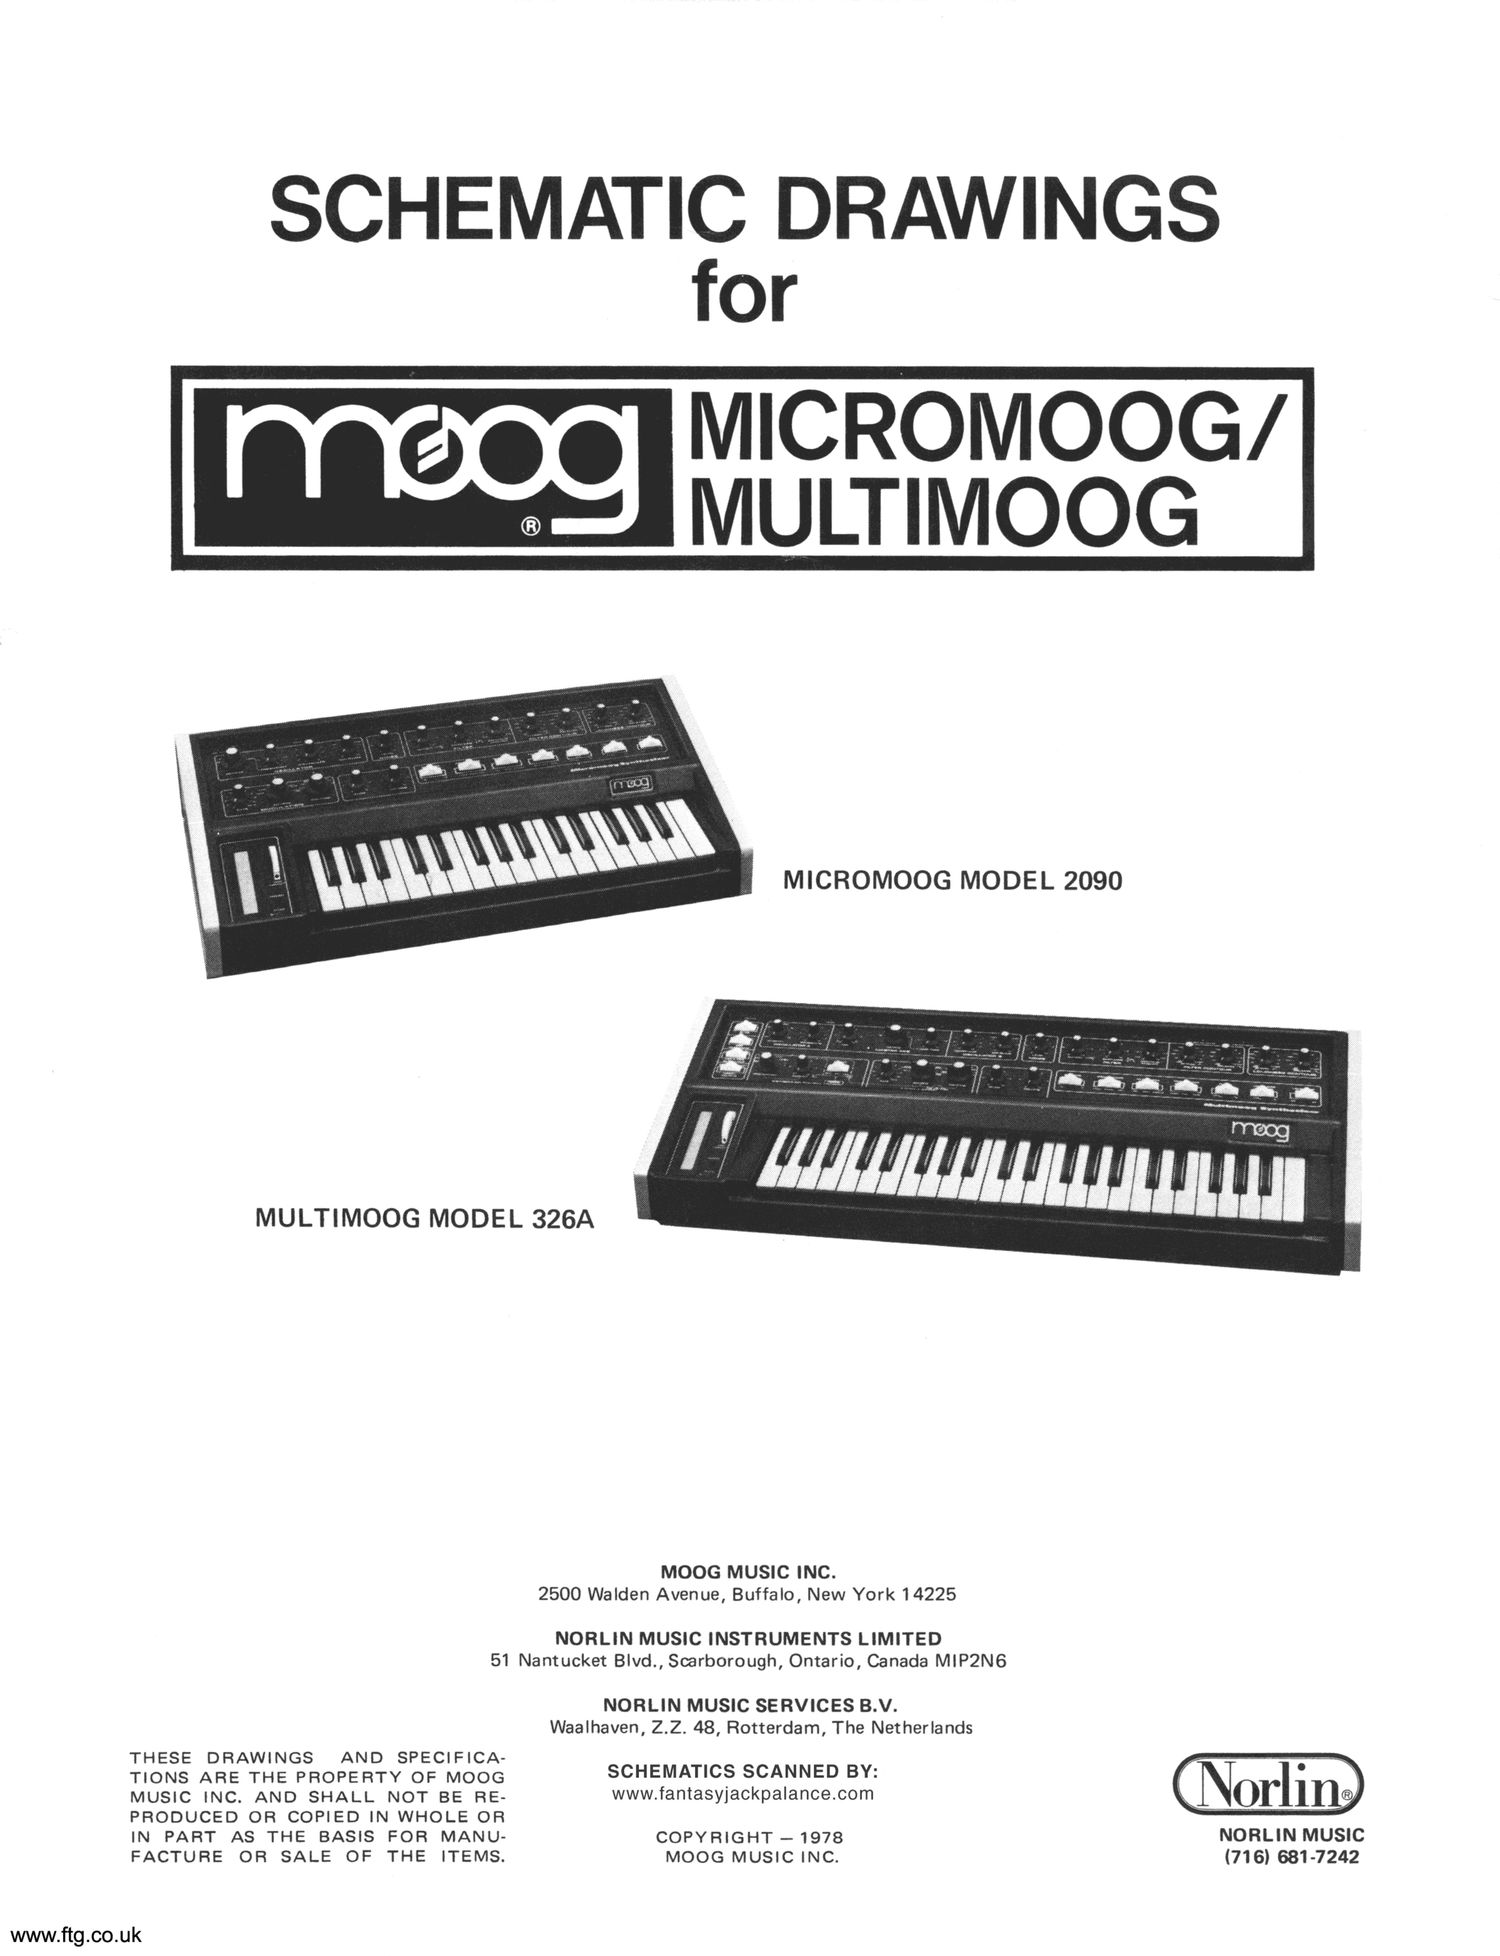 moog micromoog multimoog schematics